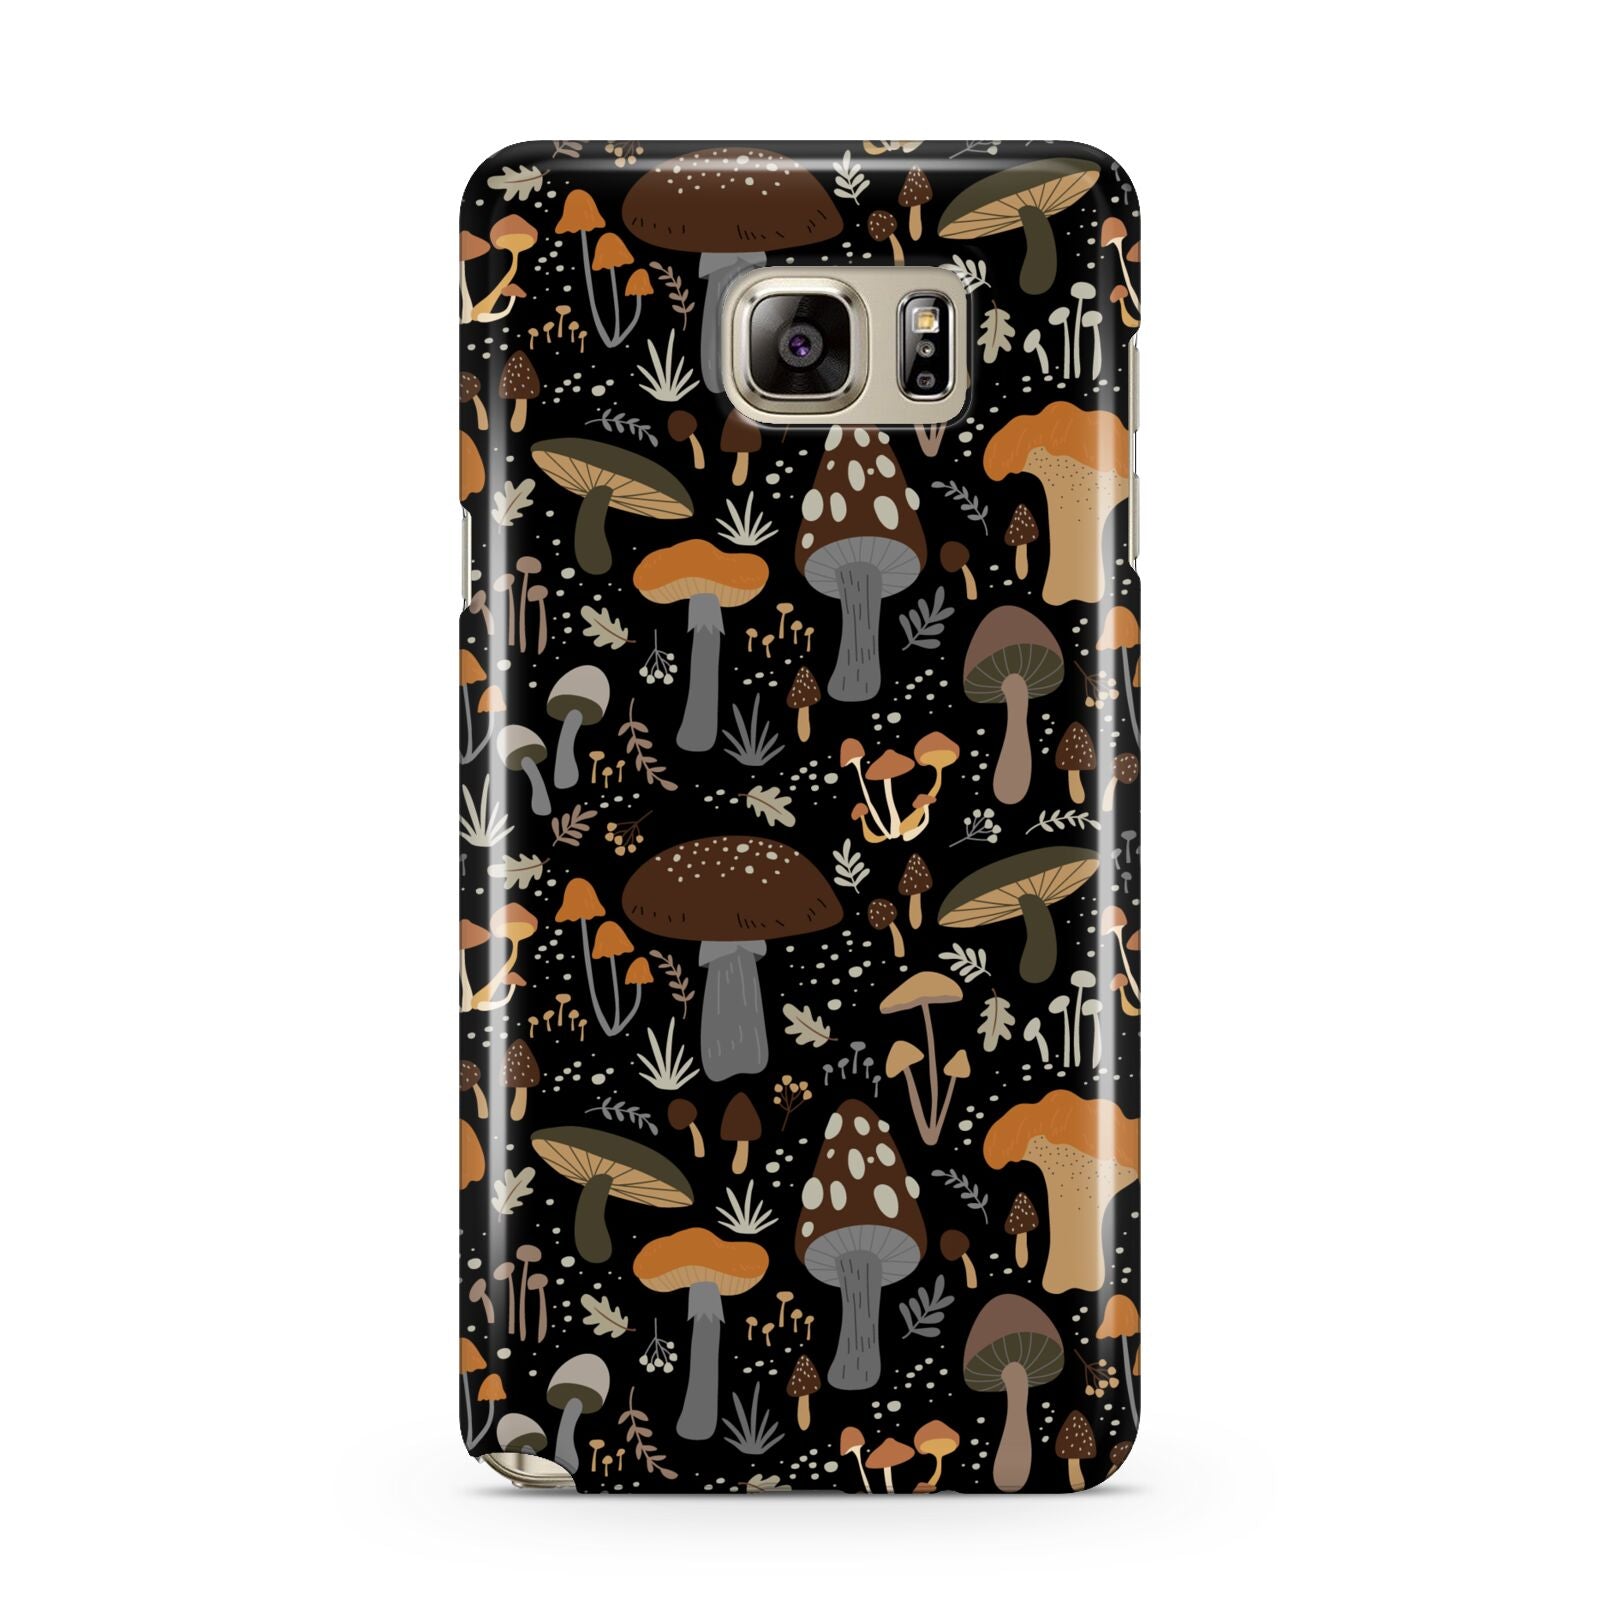 Mushroom Samsung Galaxy Note 5 Case